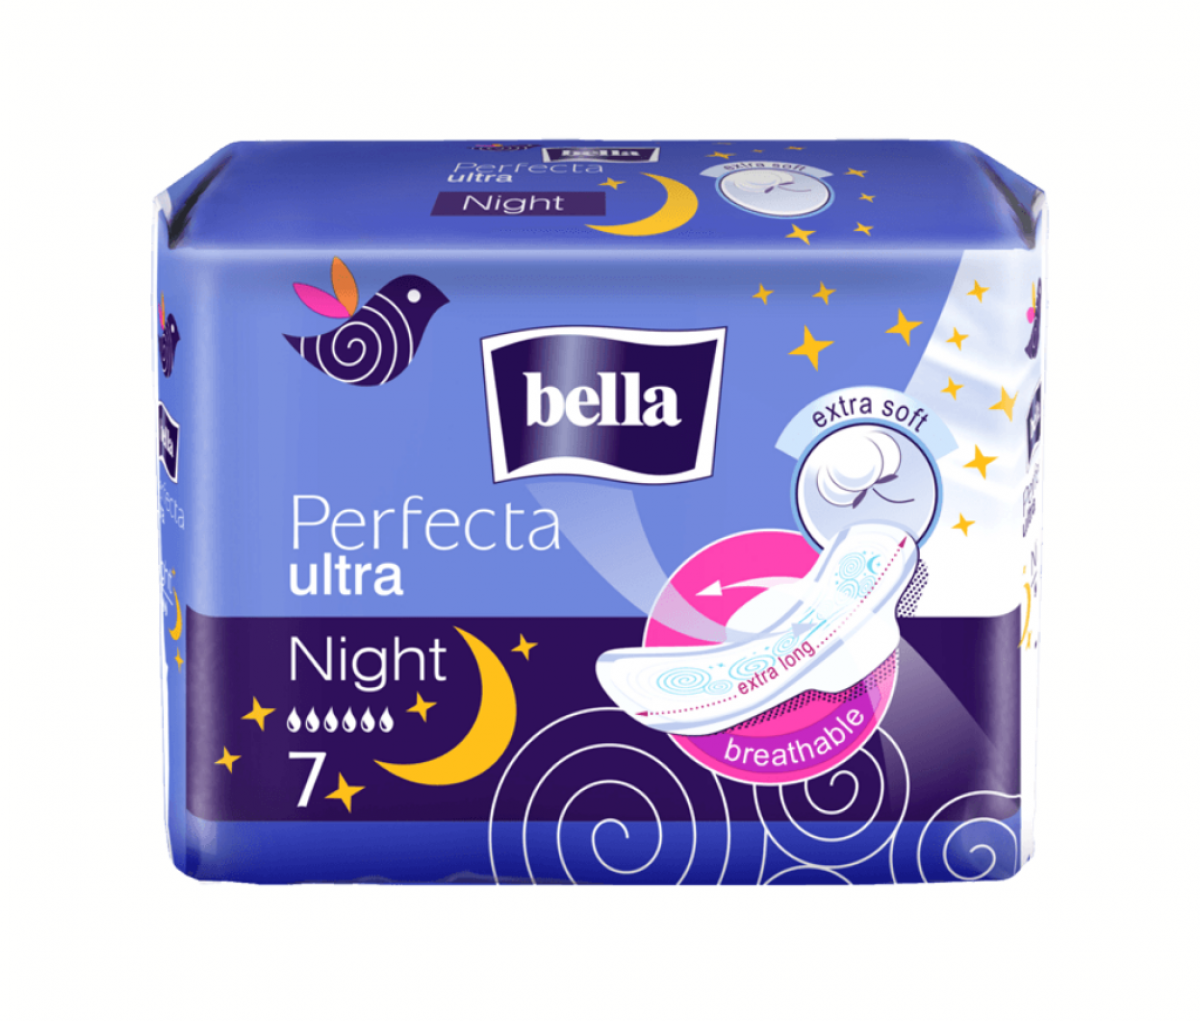 TZMO Bella Ultrathin Perfecta Night A7